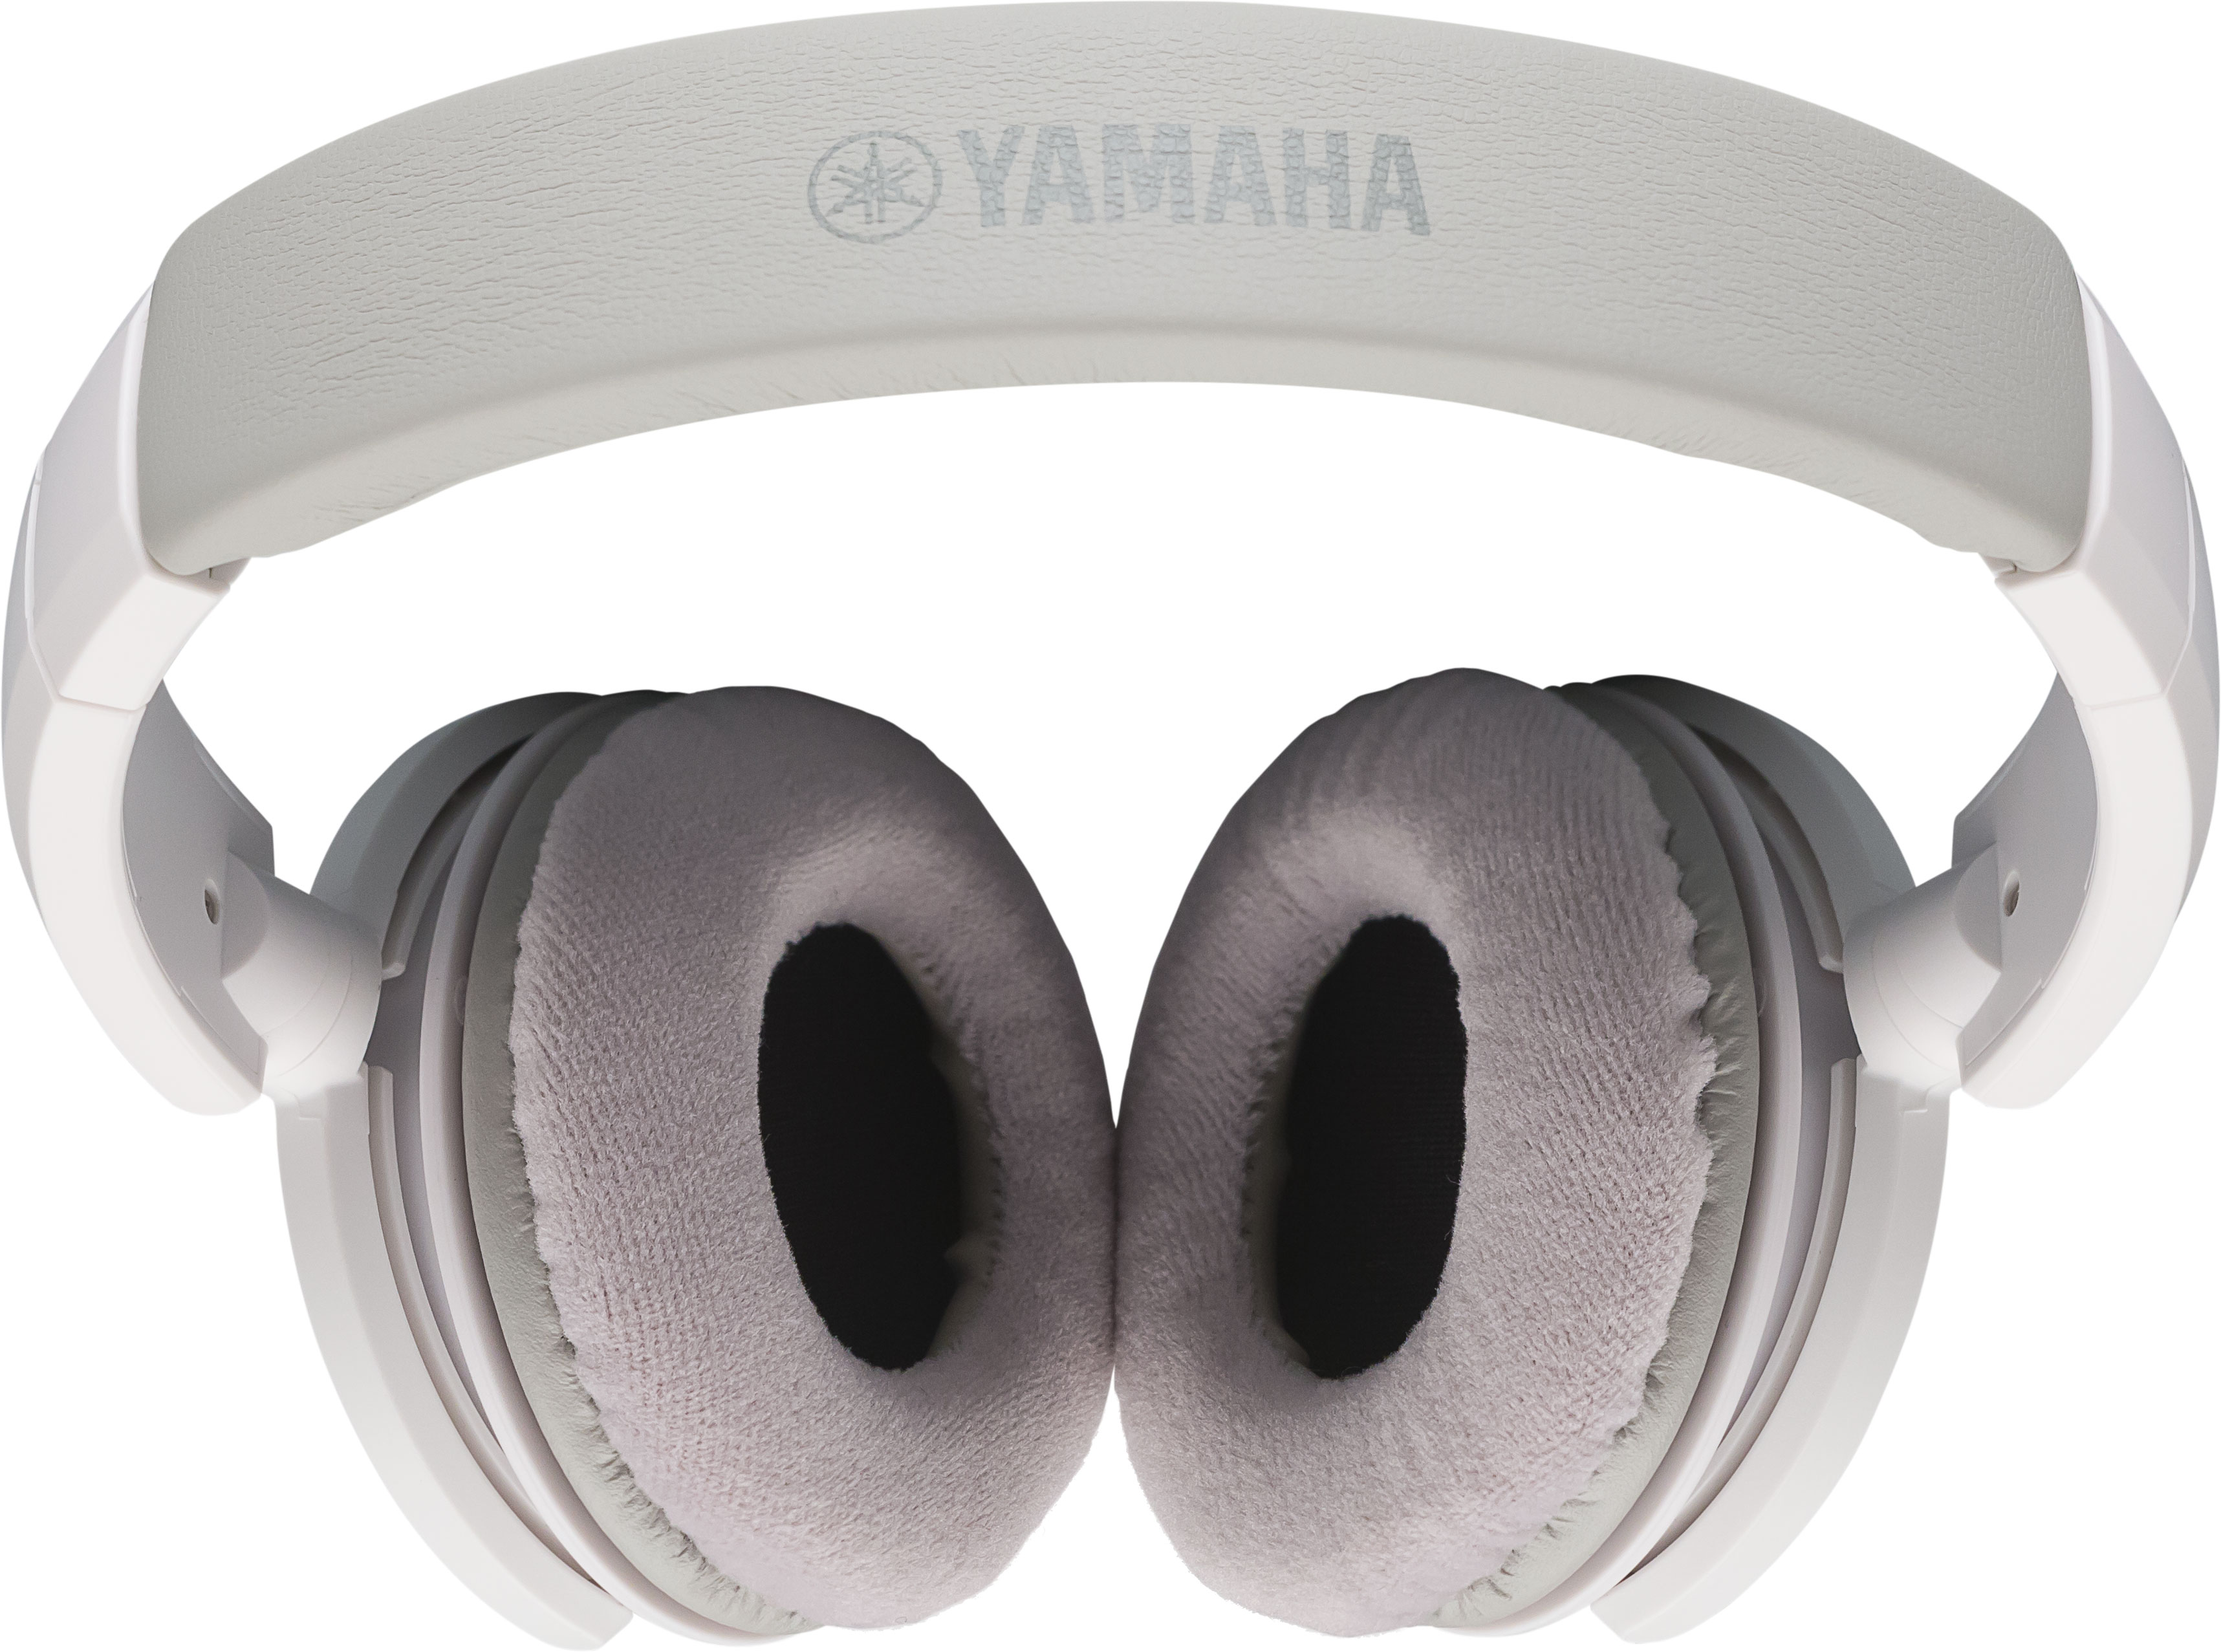 Yamaha Hph-150wh - Open headphones - Variation 2